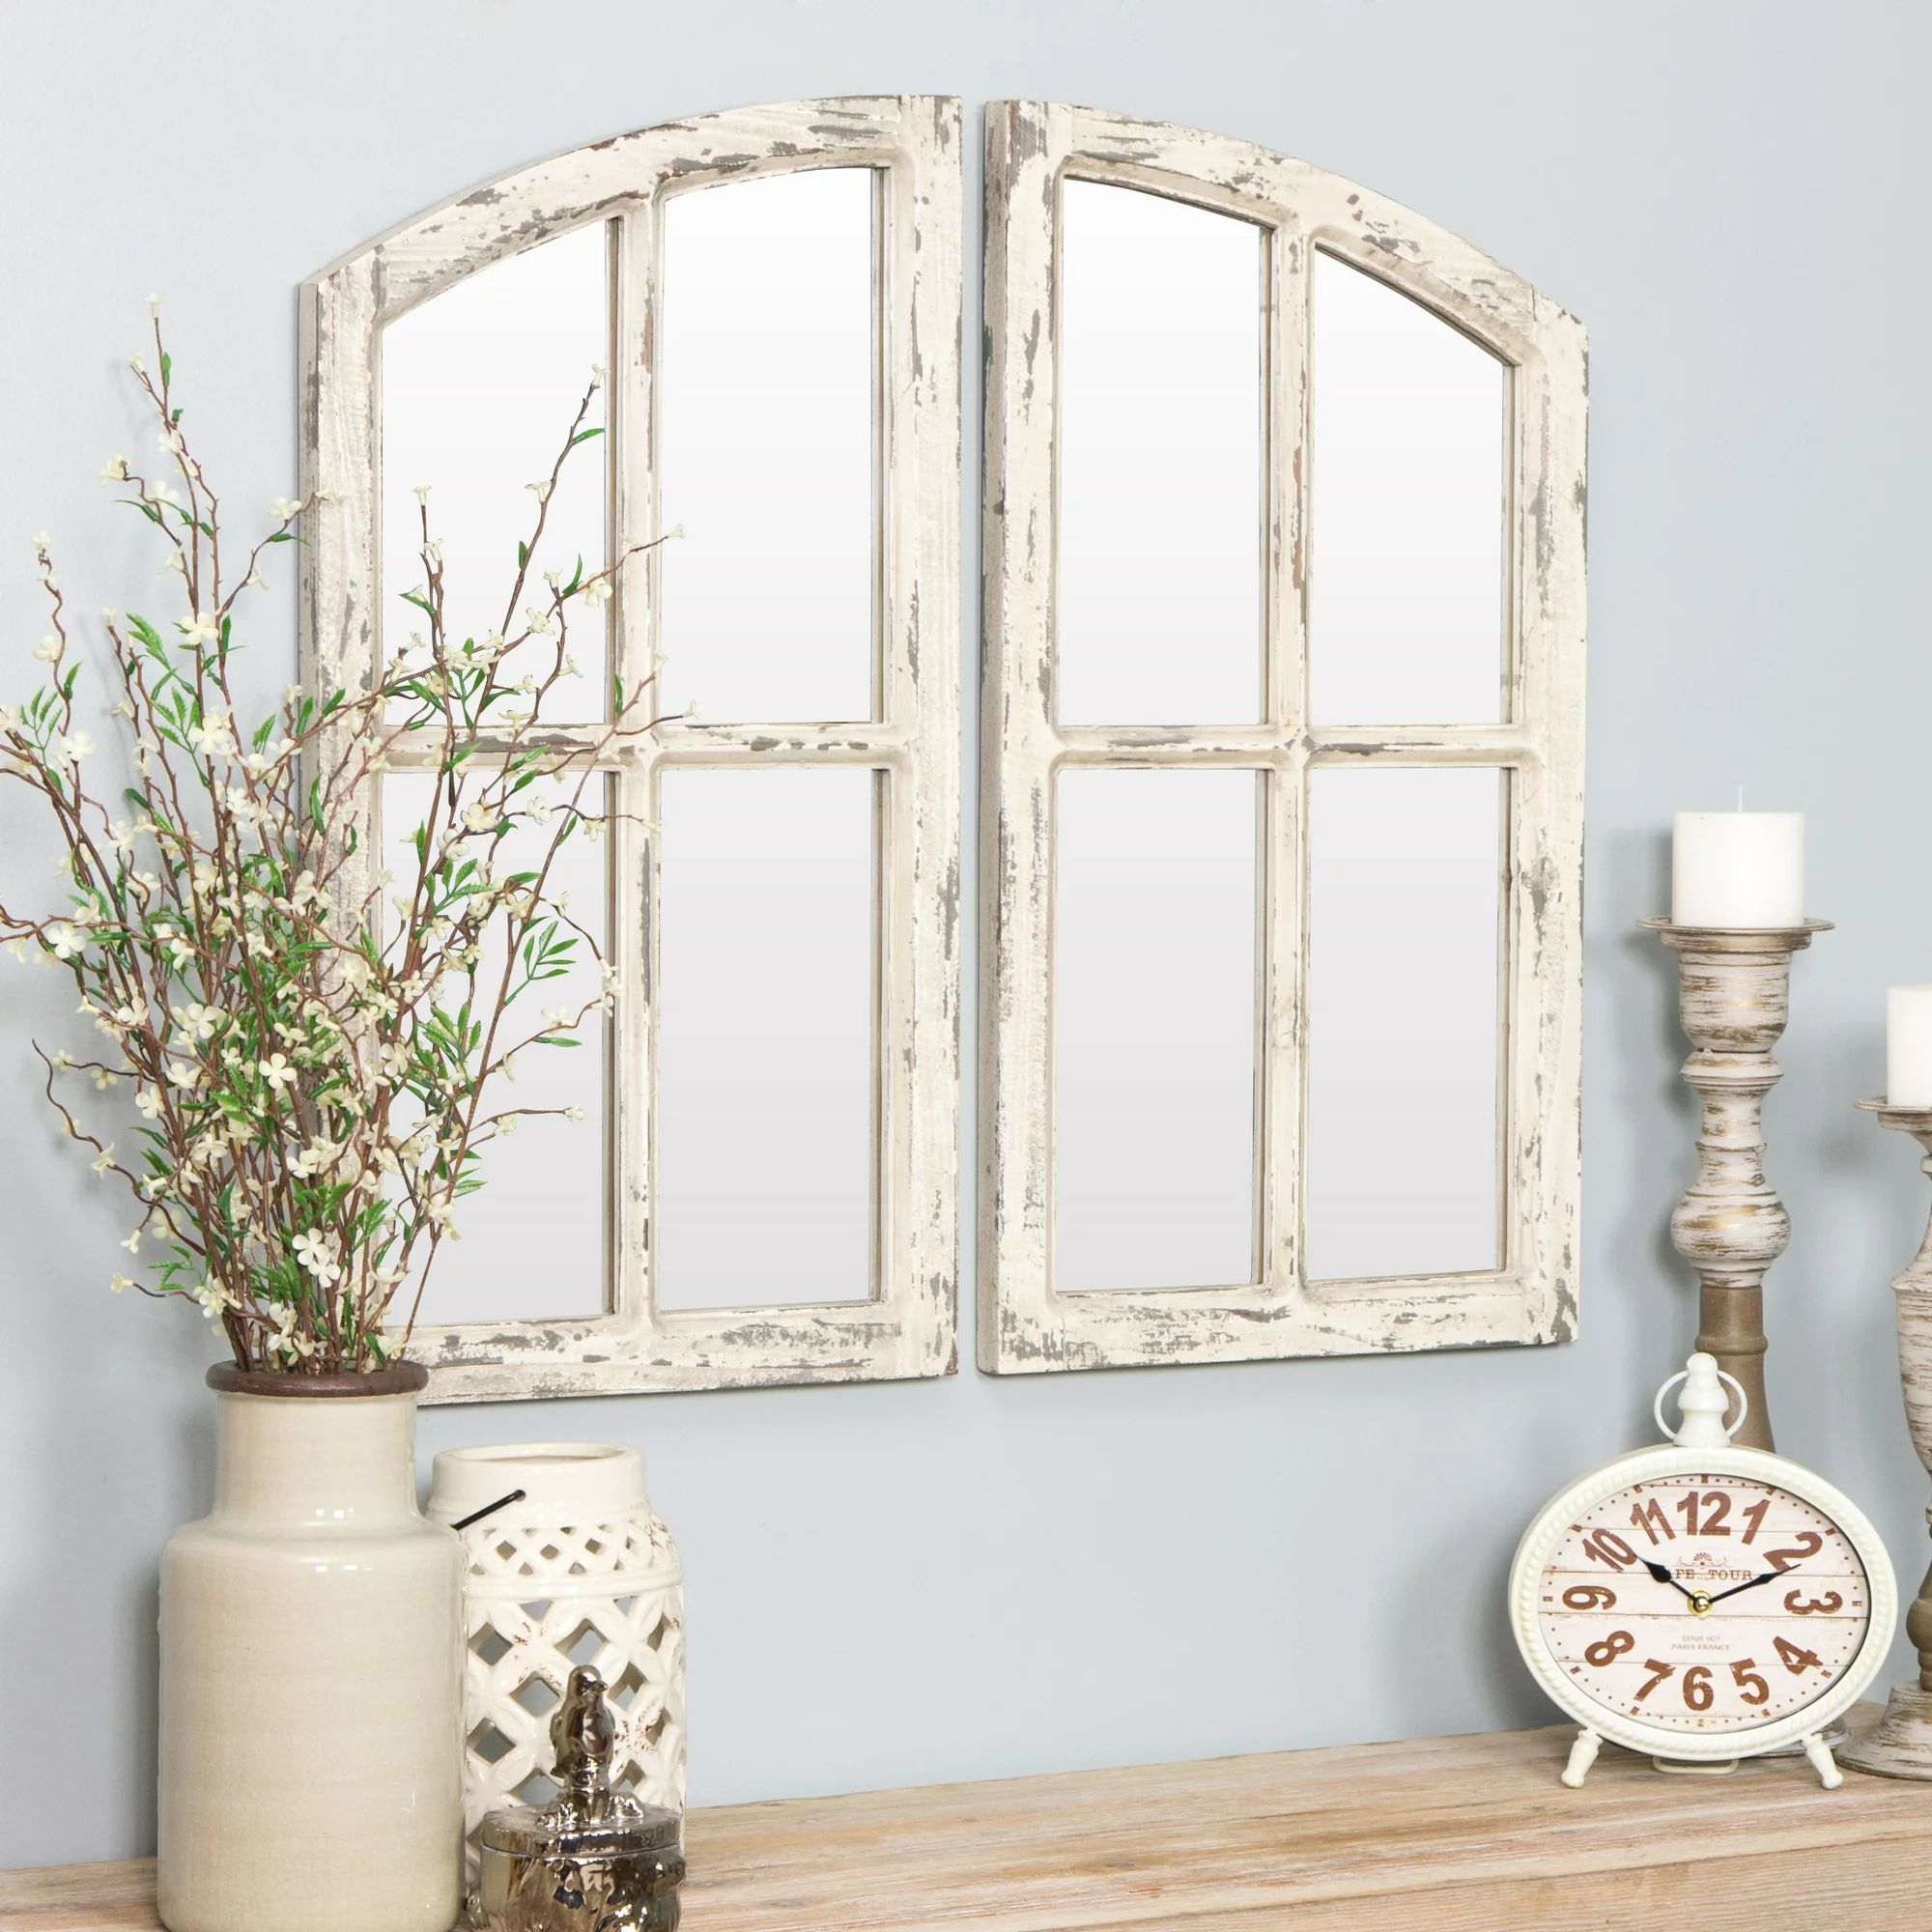 Jolene Arch Window Pane Mirrors Off-White 27" x 15" (Set of 2) by Aspire | Walmart (US)